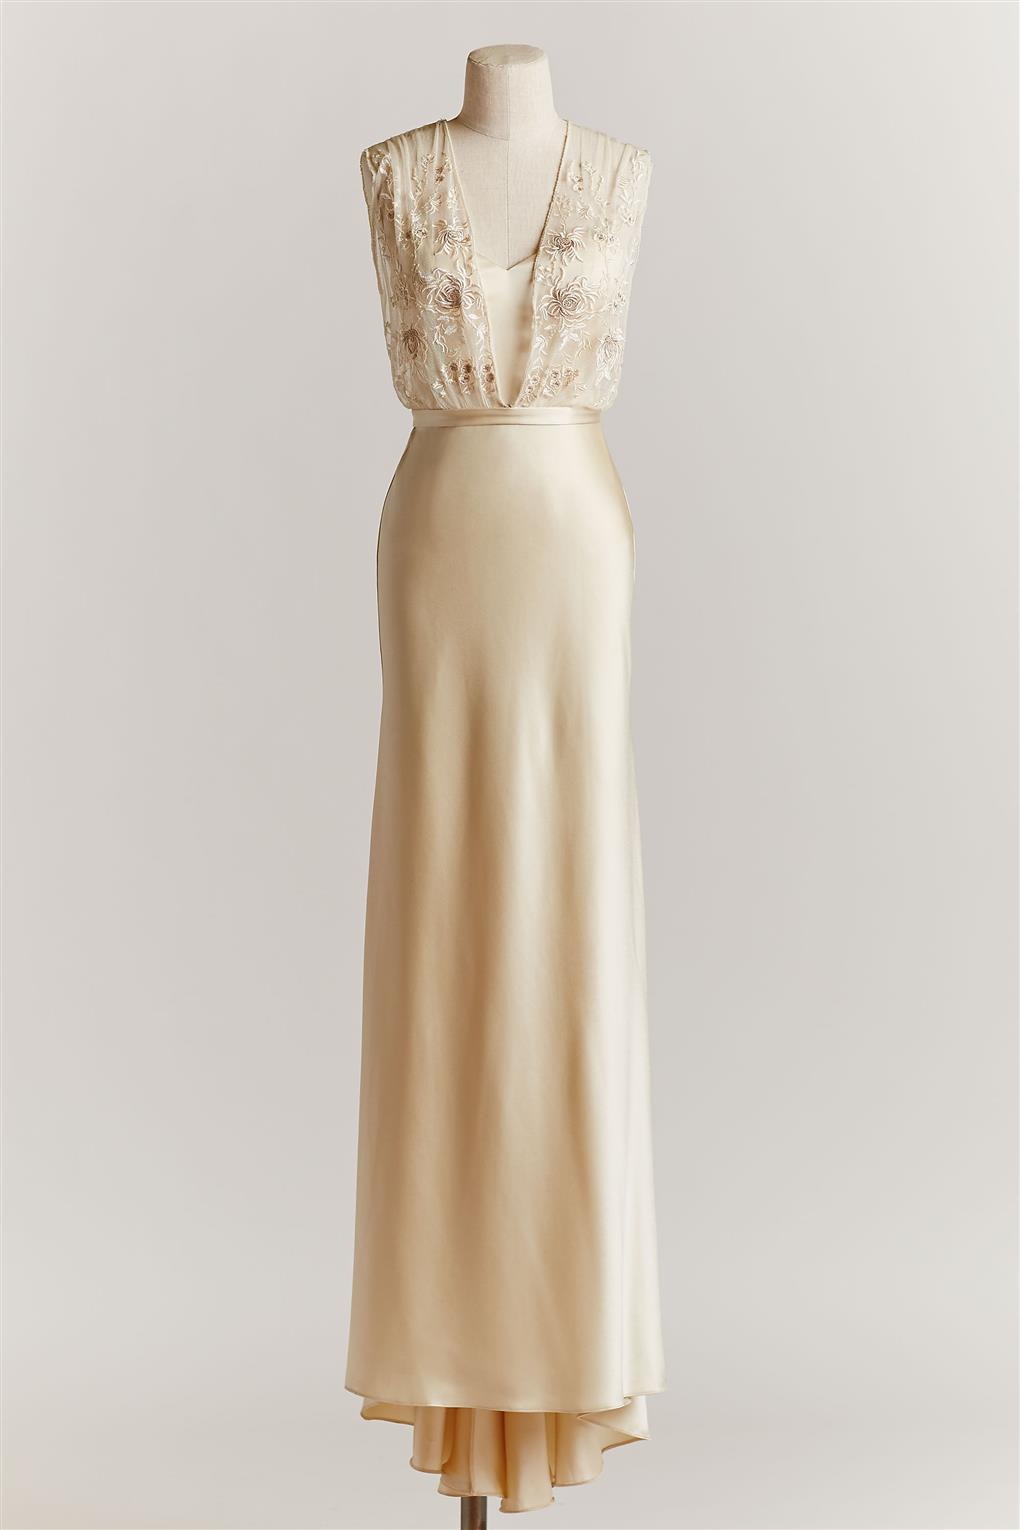 Zaden Wedding Dress from BHLDNs Spring 2015 Collection